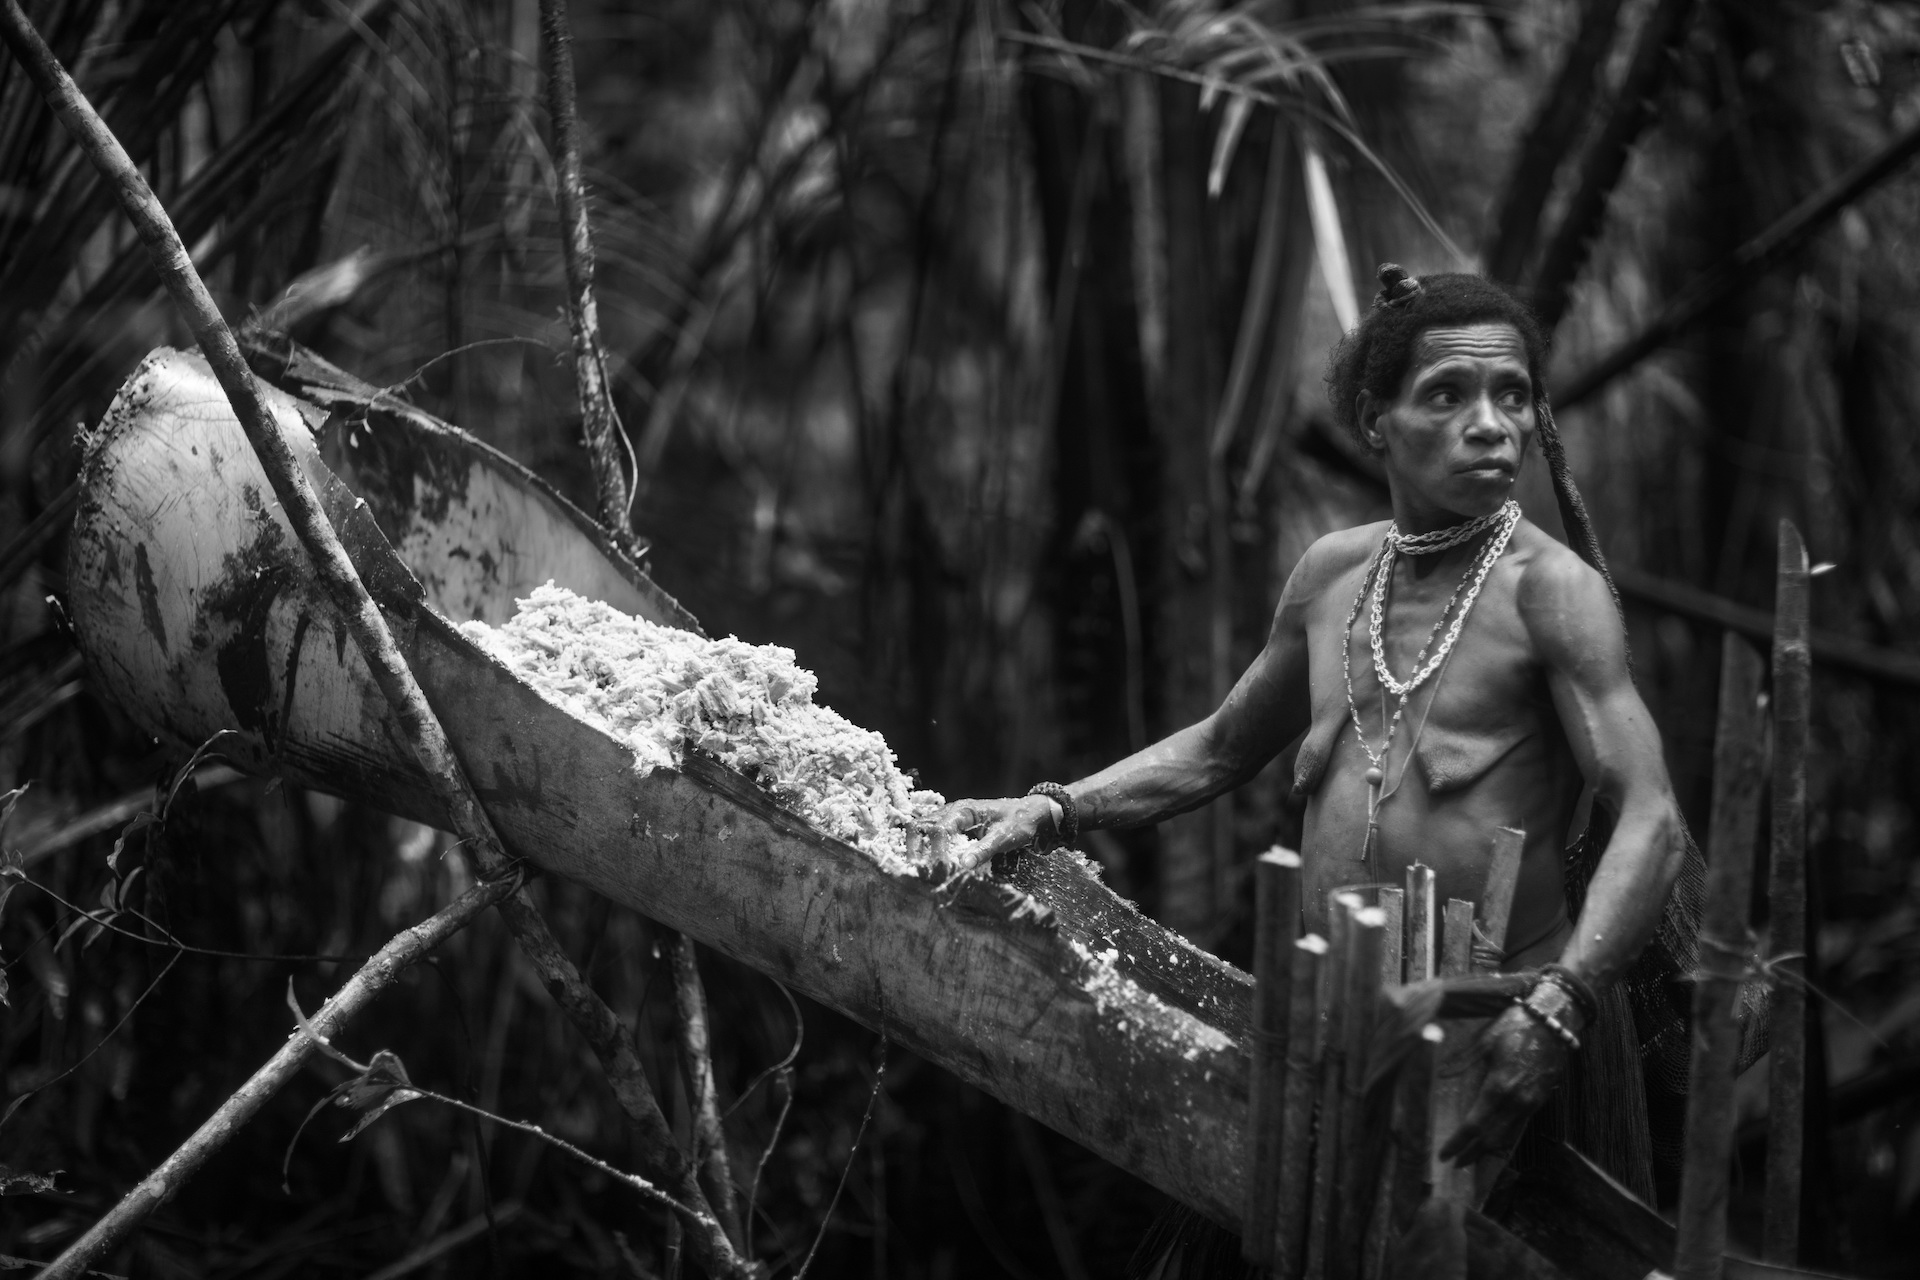 Ságo, Kmen Korowai - Západní Papua - Planeta lidí